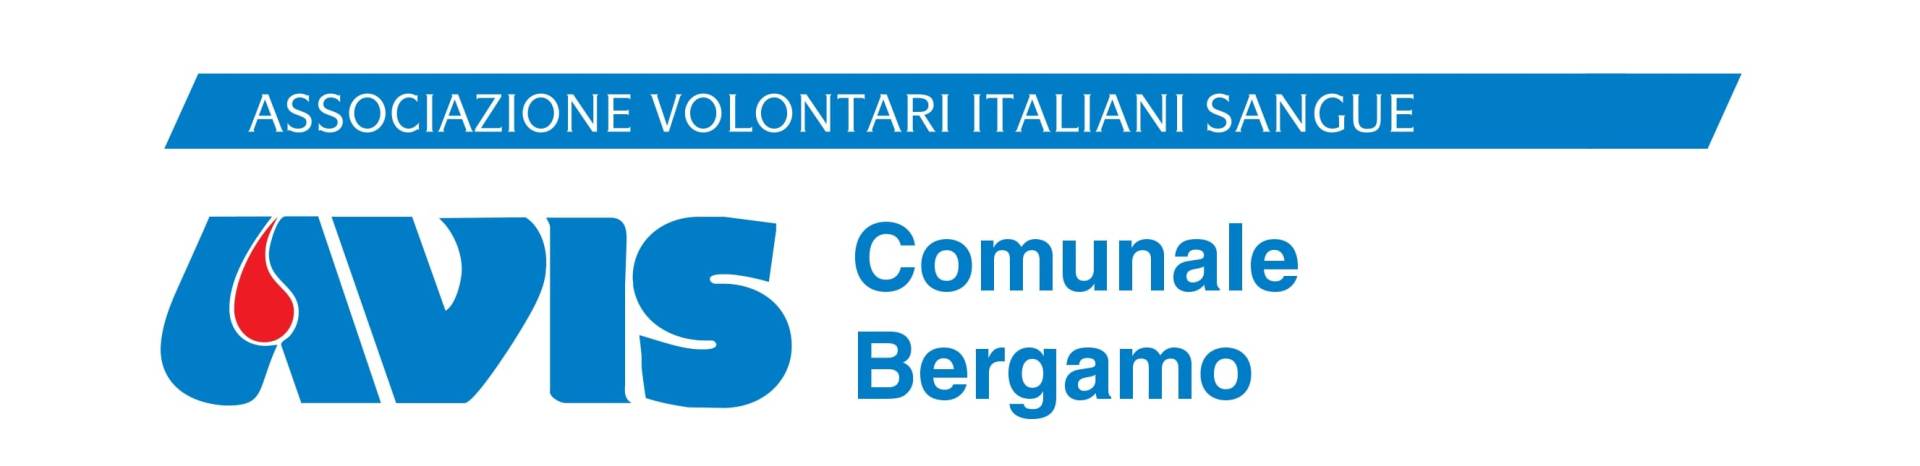 Avis comunale Bergamo